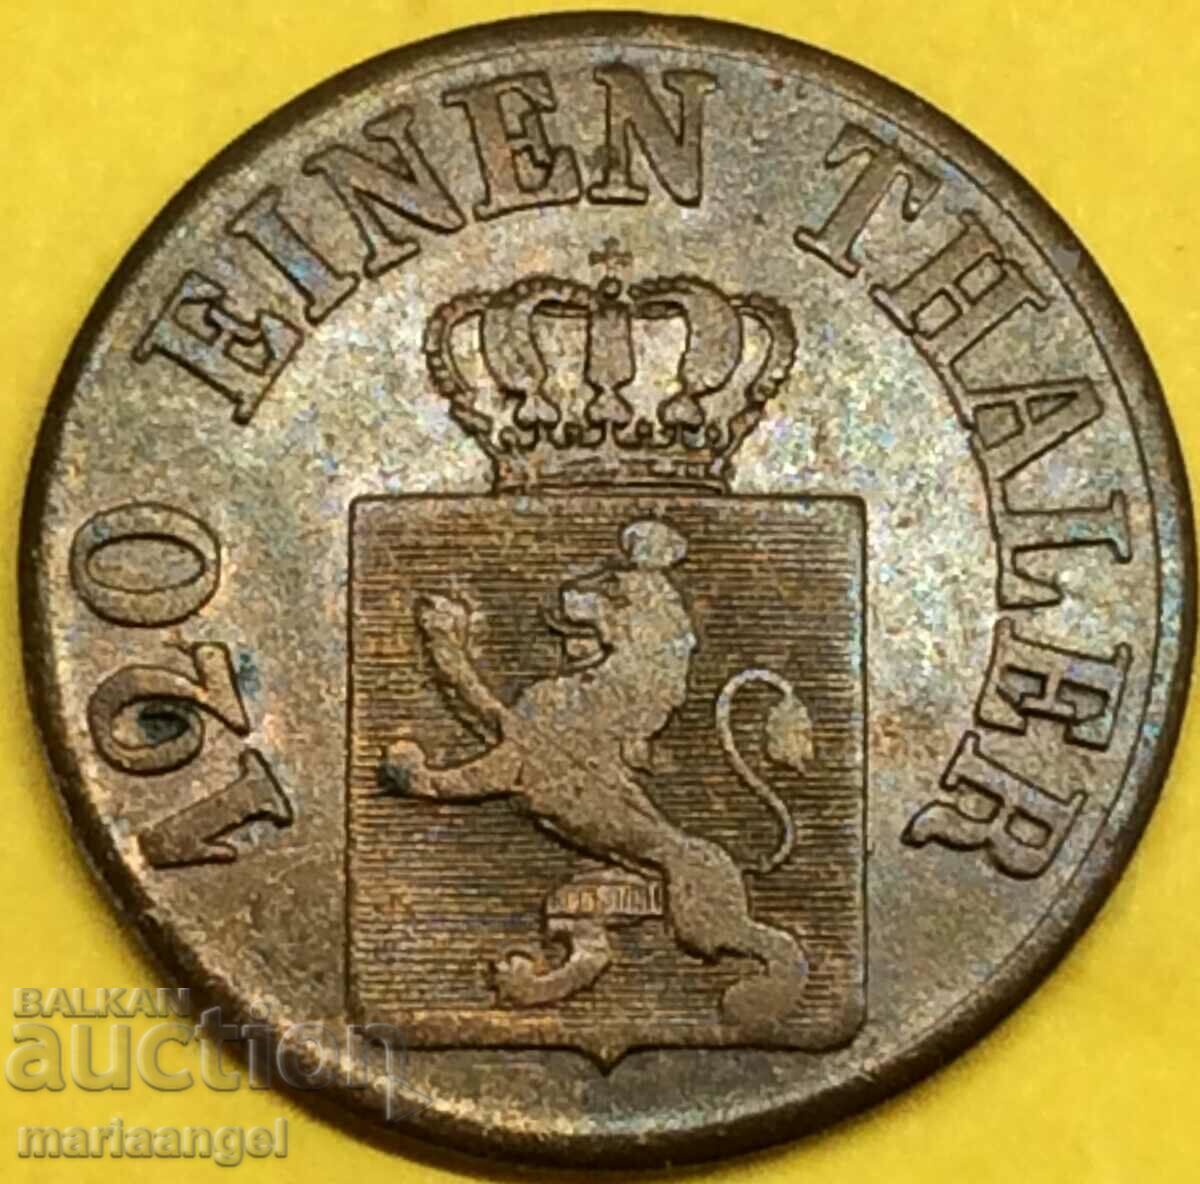 1/120 thaler 3 heller 1851 Hesse Germany - quite rare